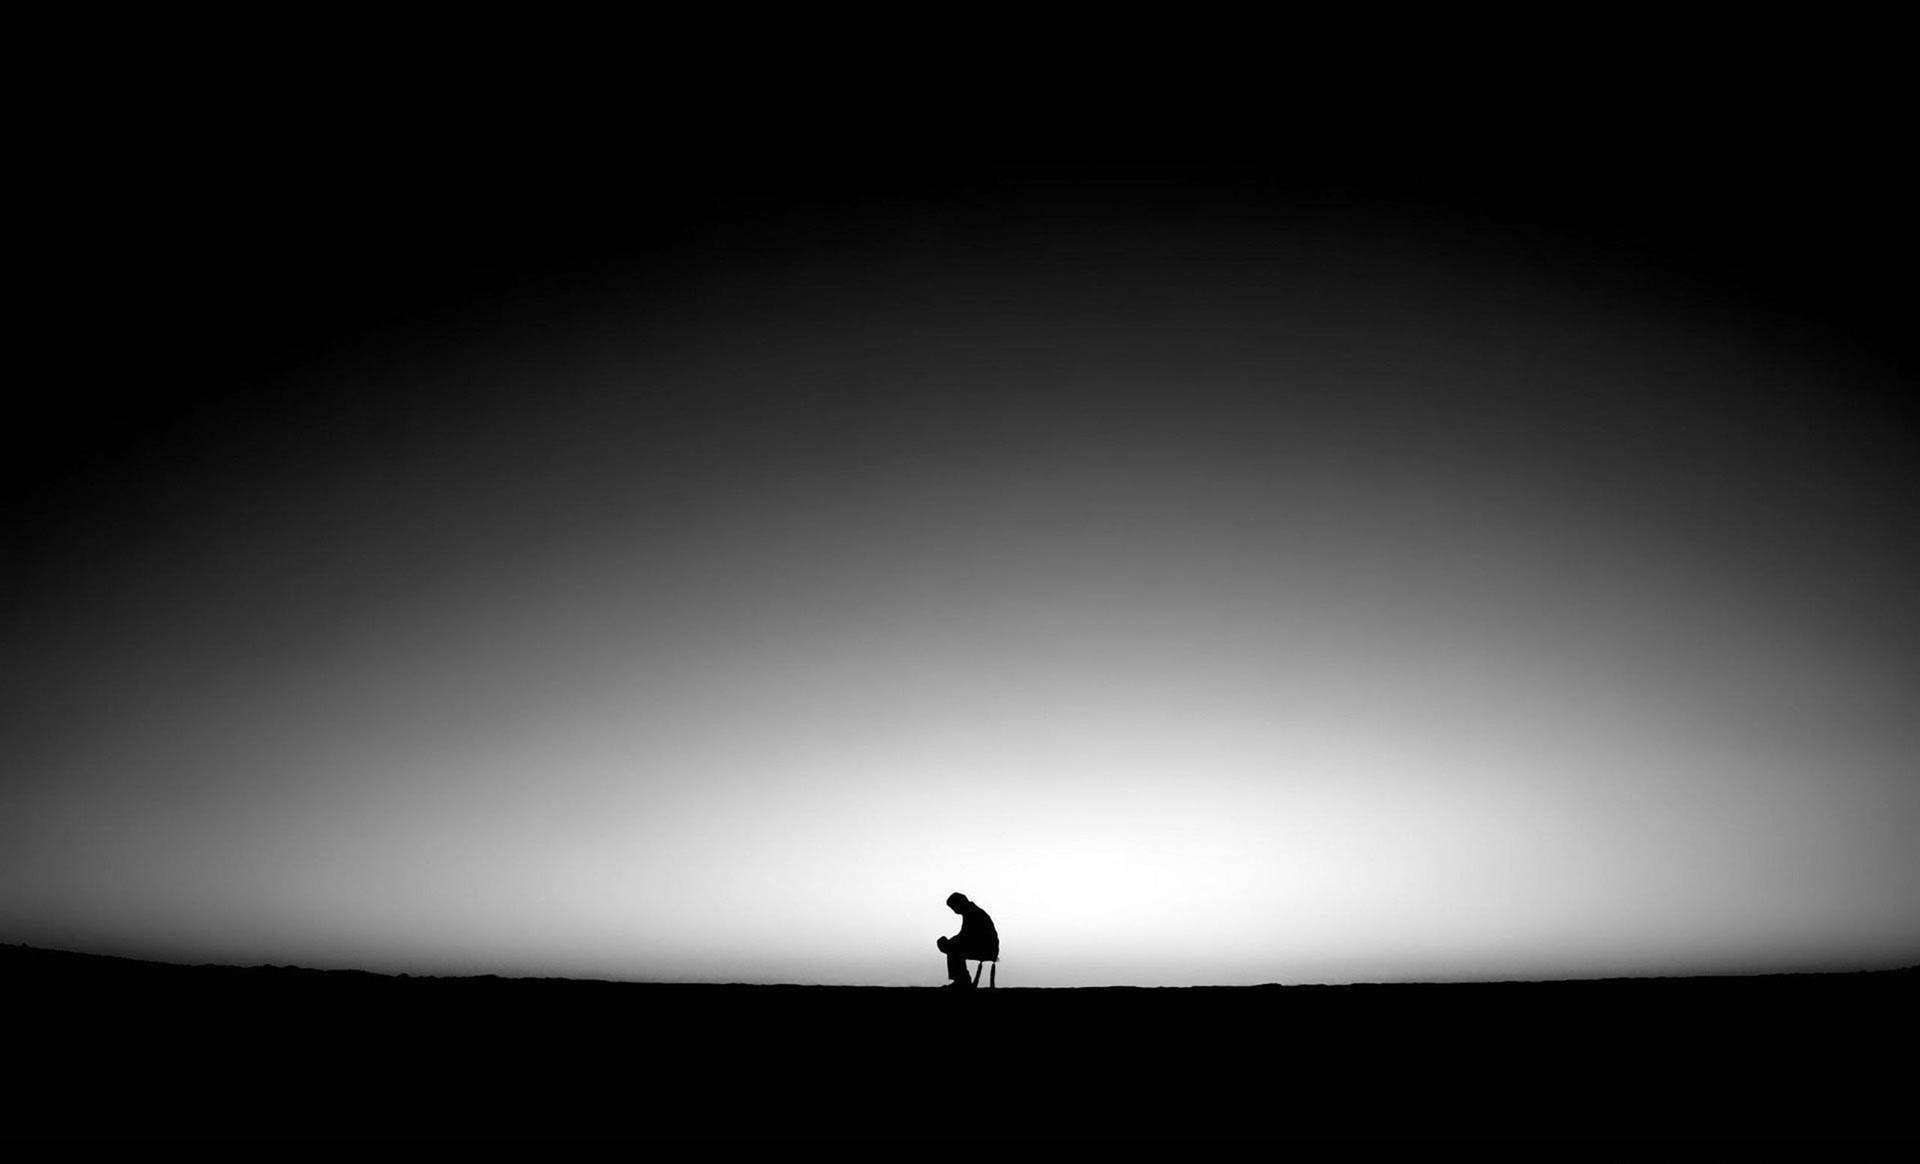 Sad Aesthetic Alone In Dark Silhouette Wallpaper